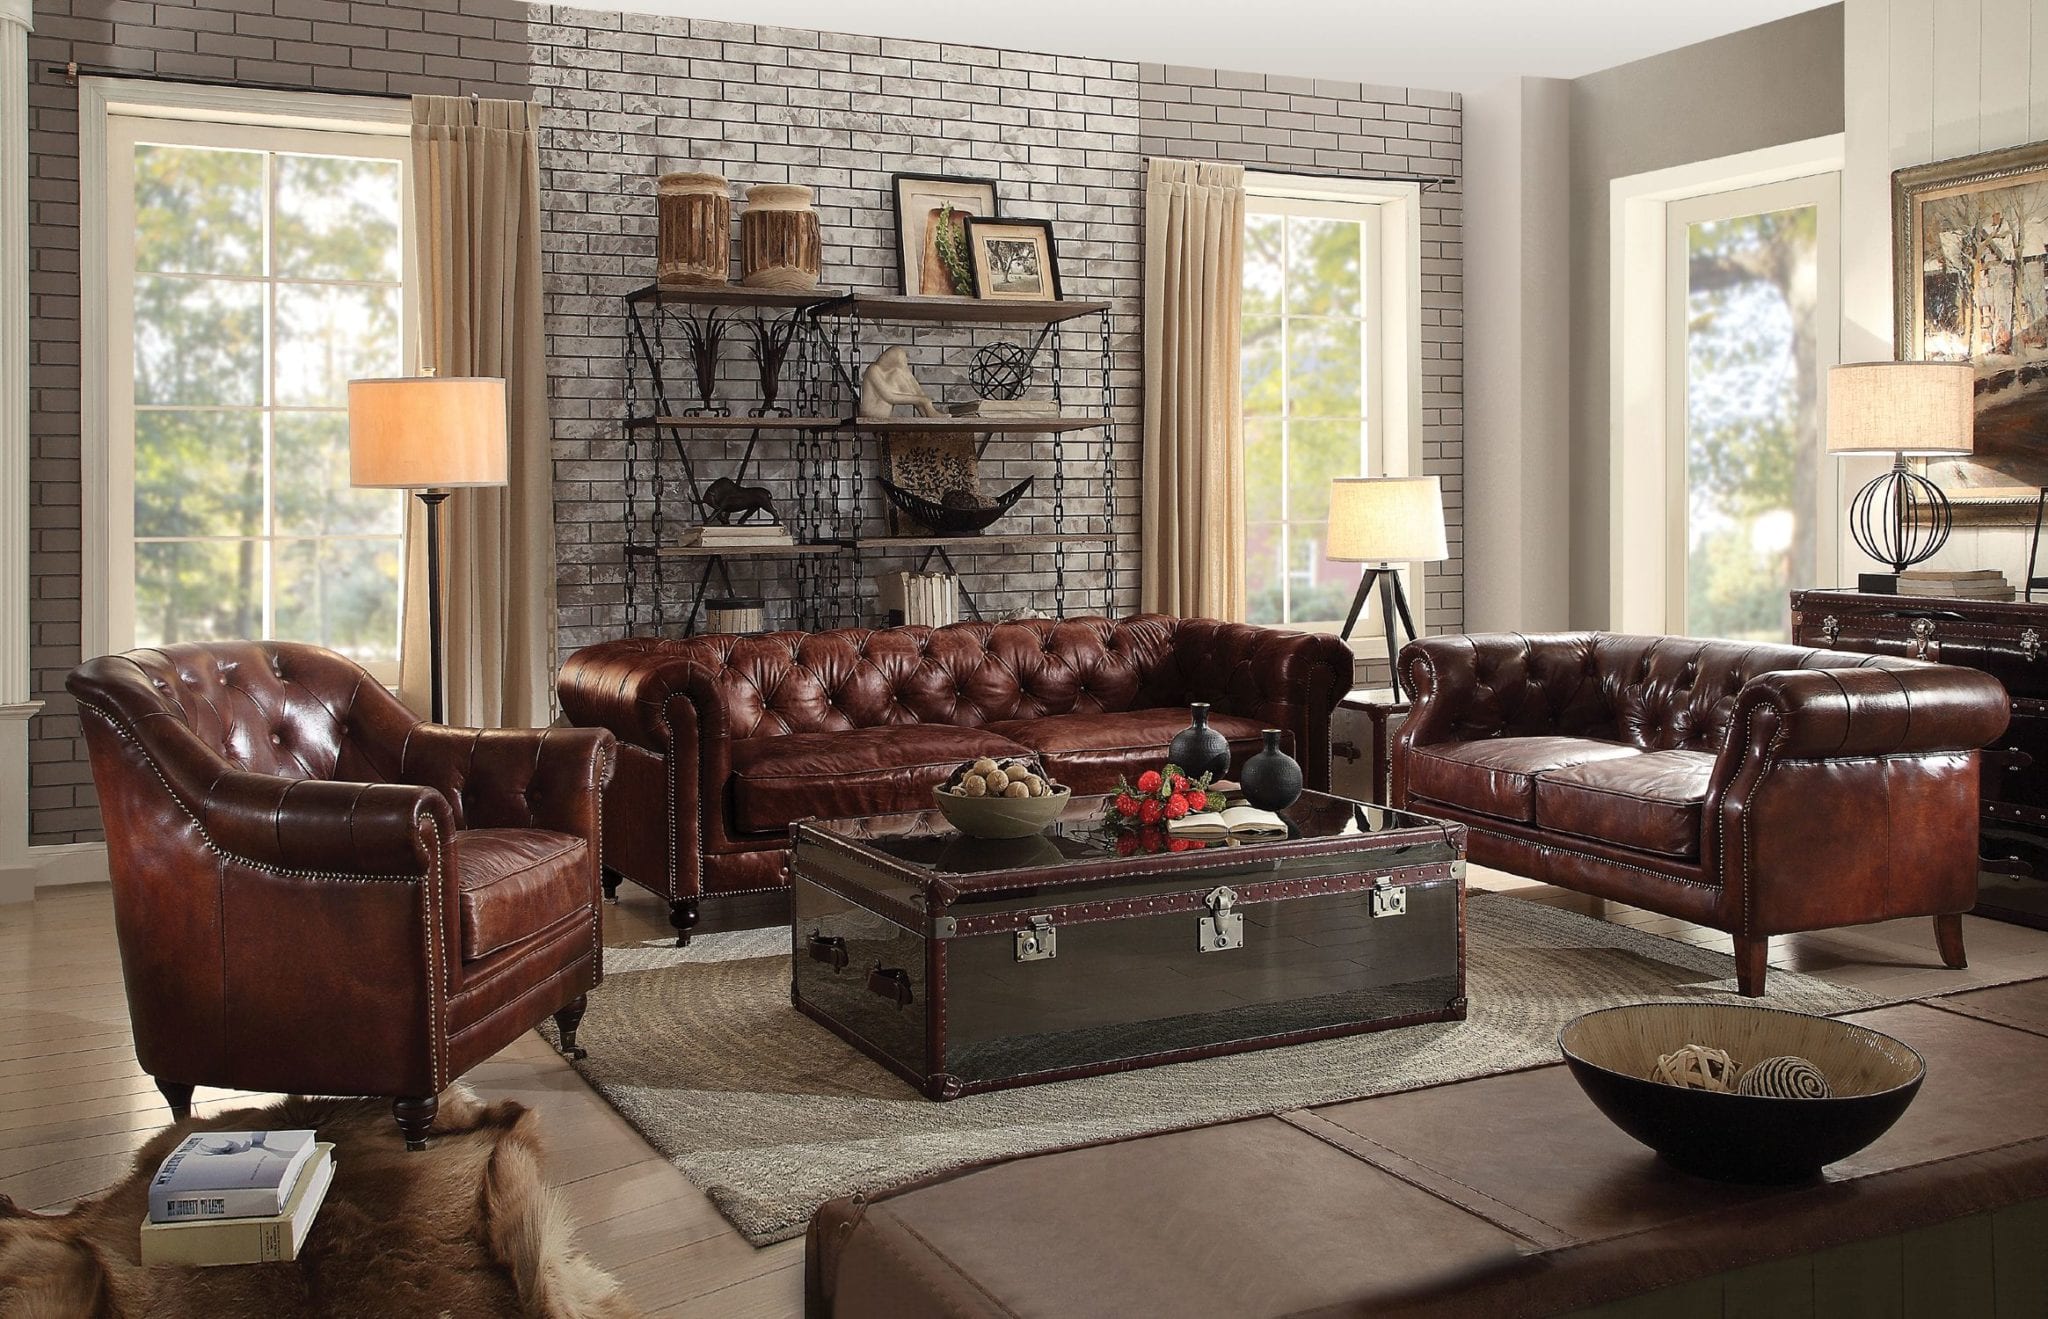 etsy vintage leather sofa